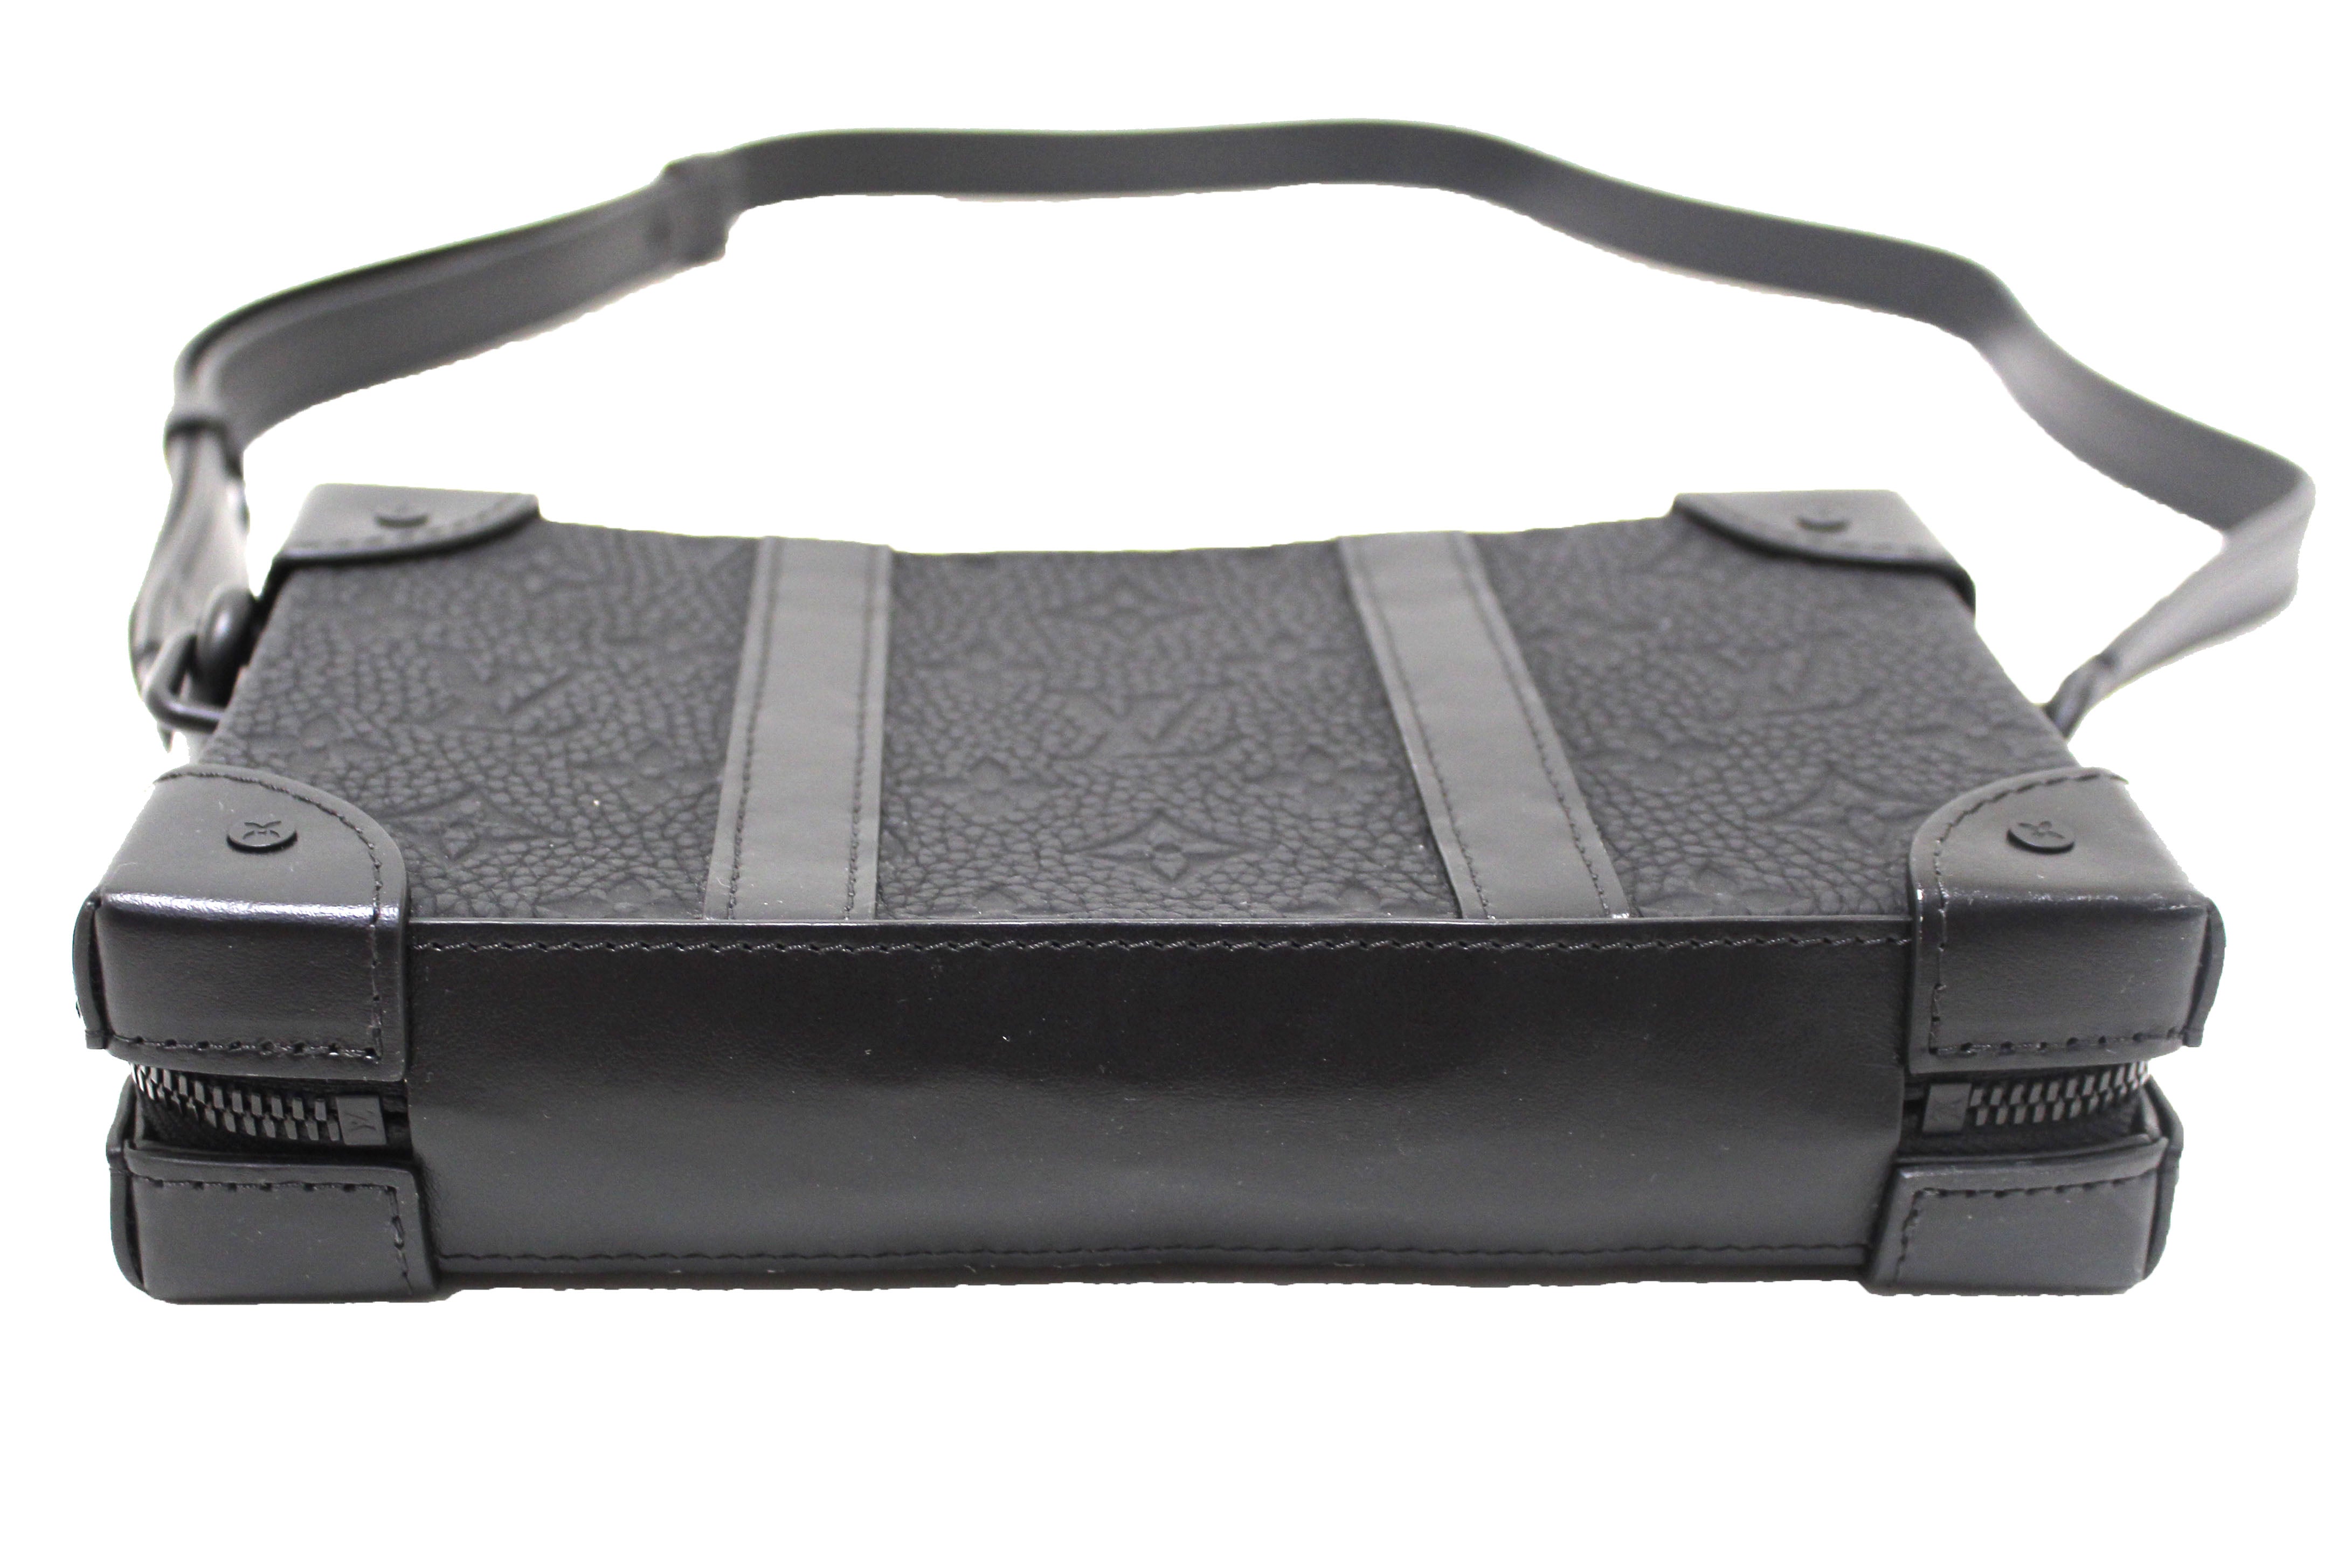 Louis Vuitton Women Trunk Taurillon Leather Crossbody Bag Black